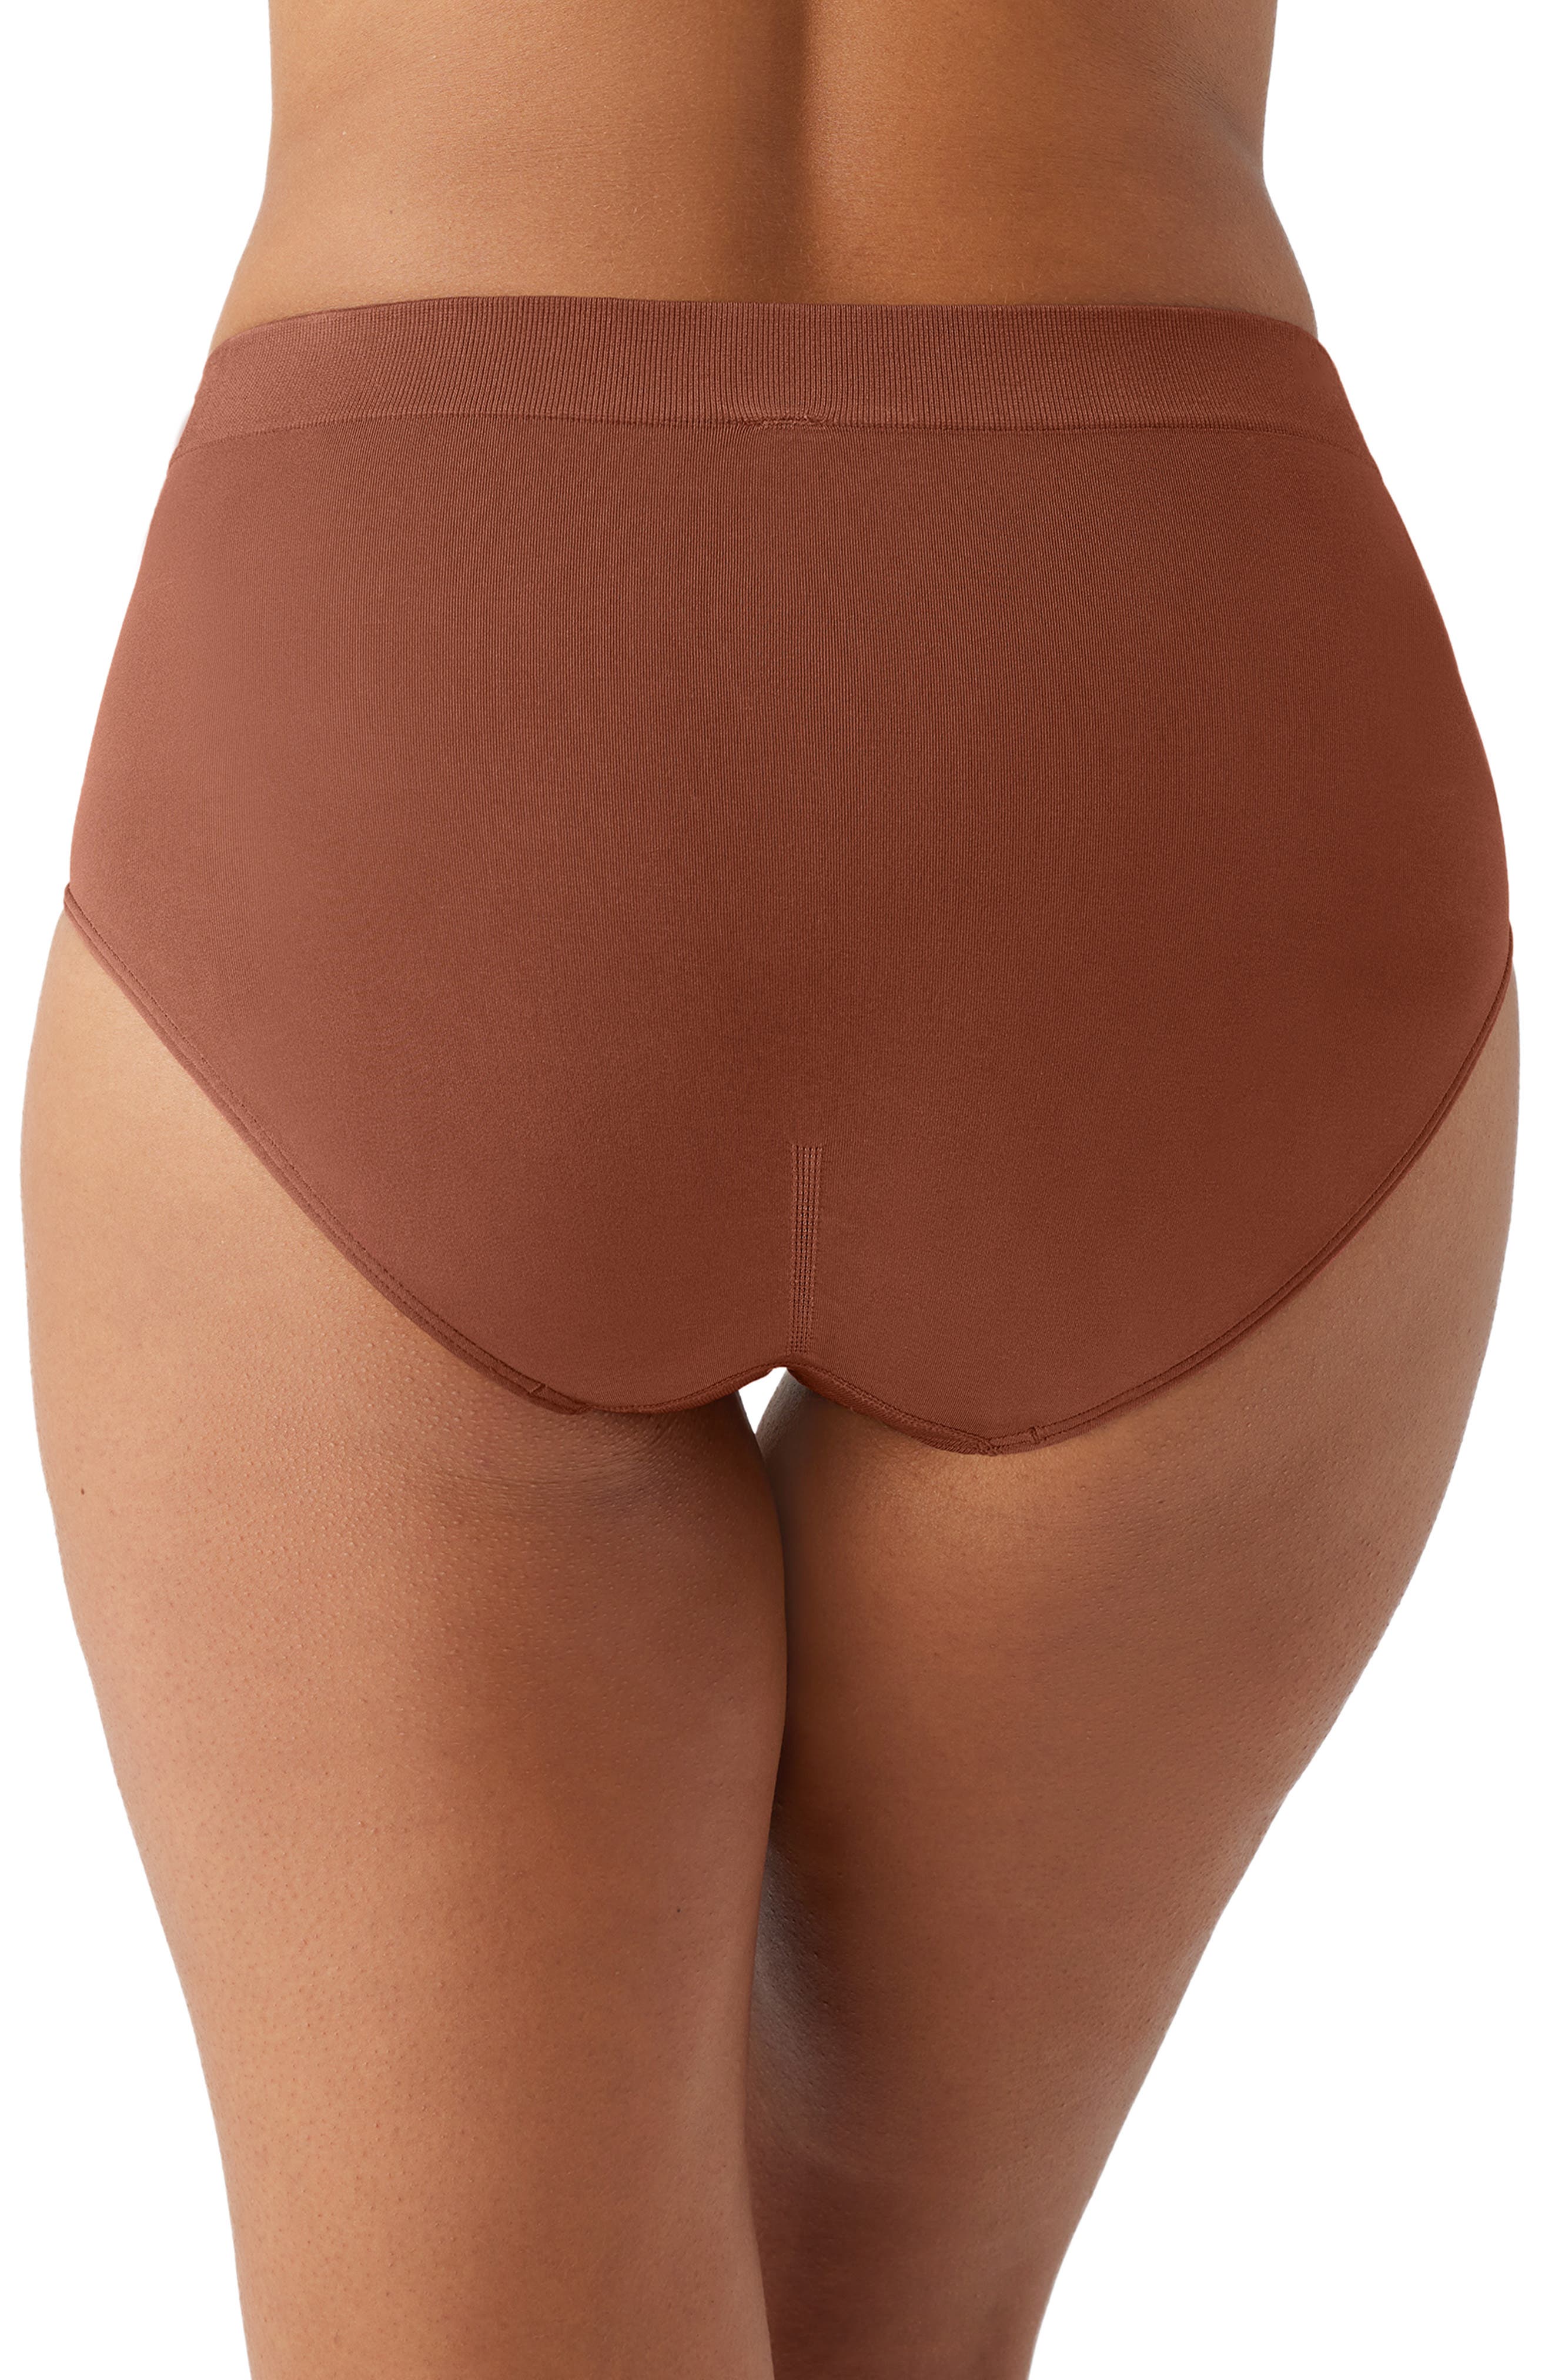 Wacoal womens B-smooth Panty briefs underwear, Black, Small US